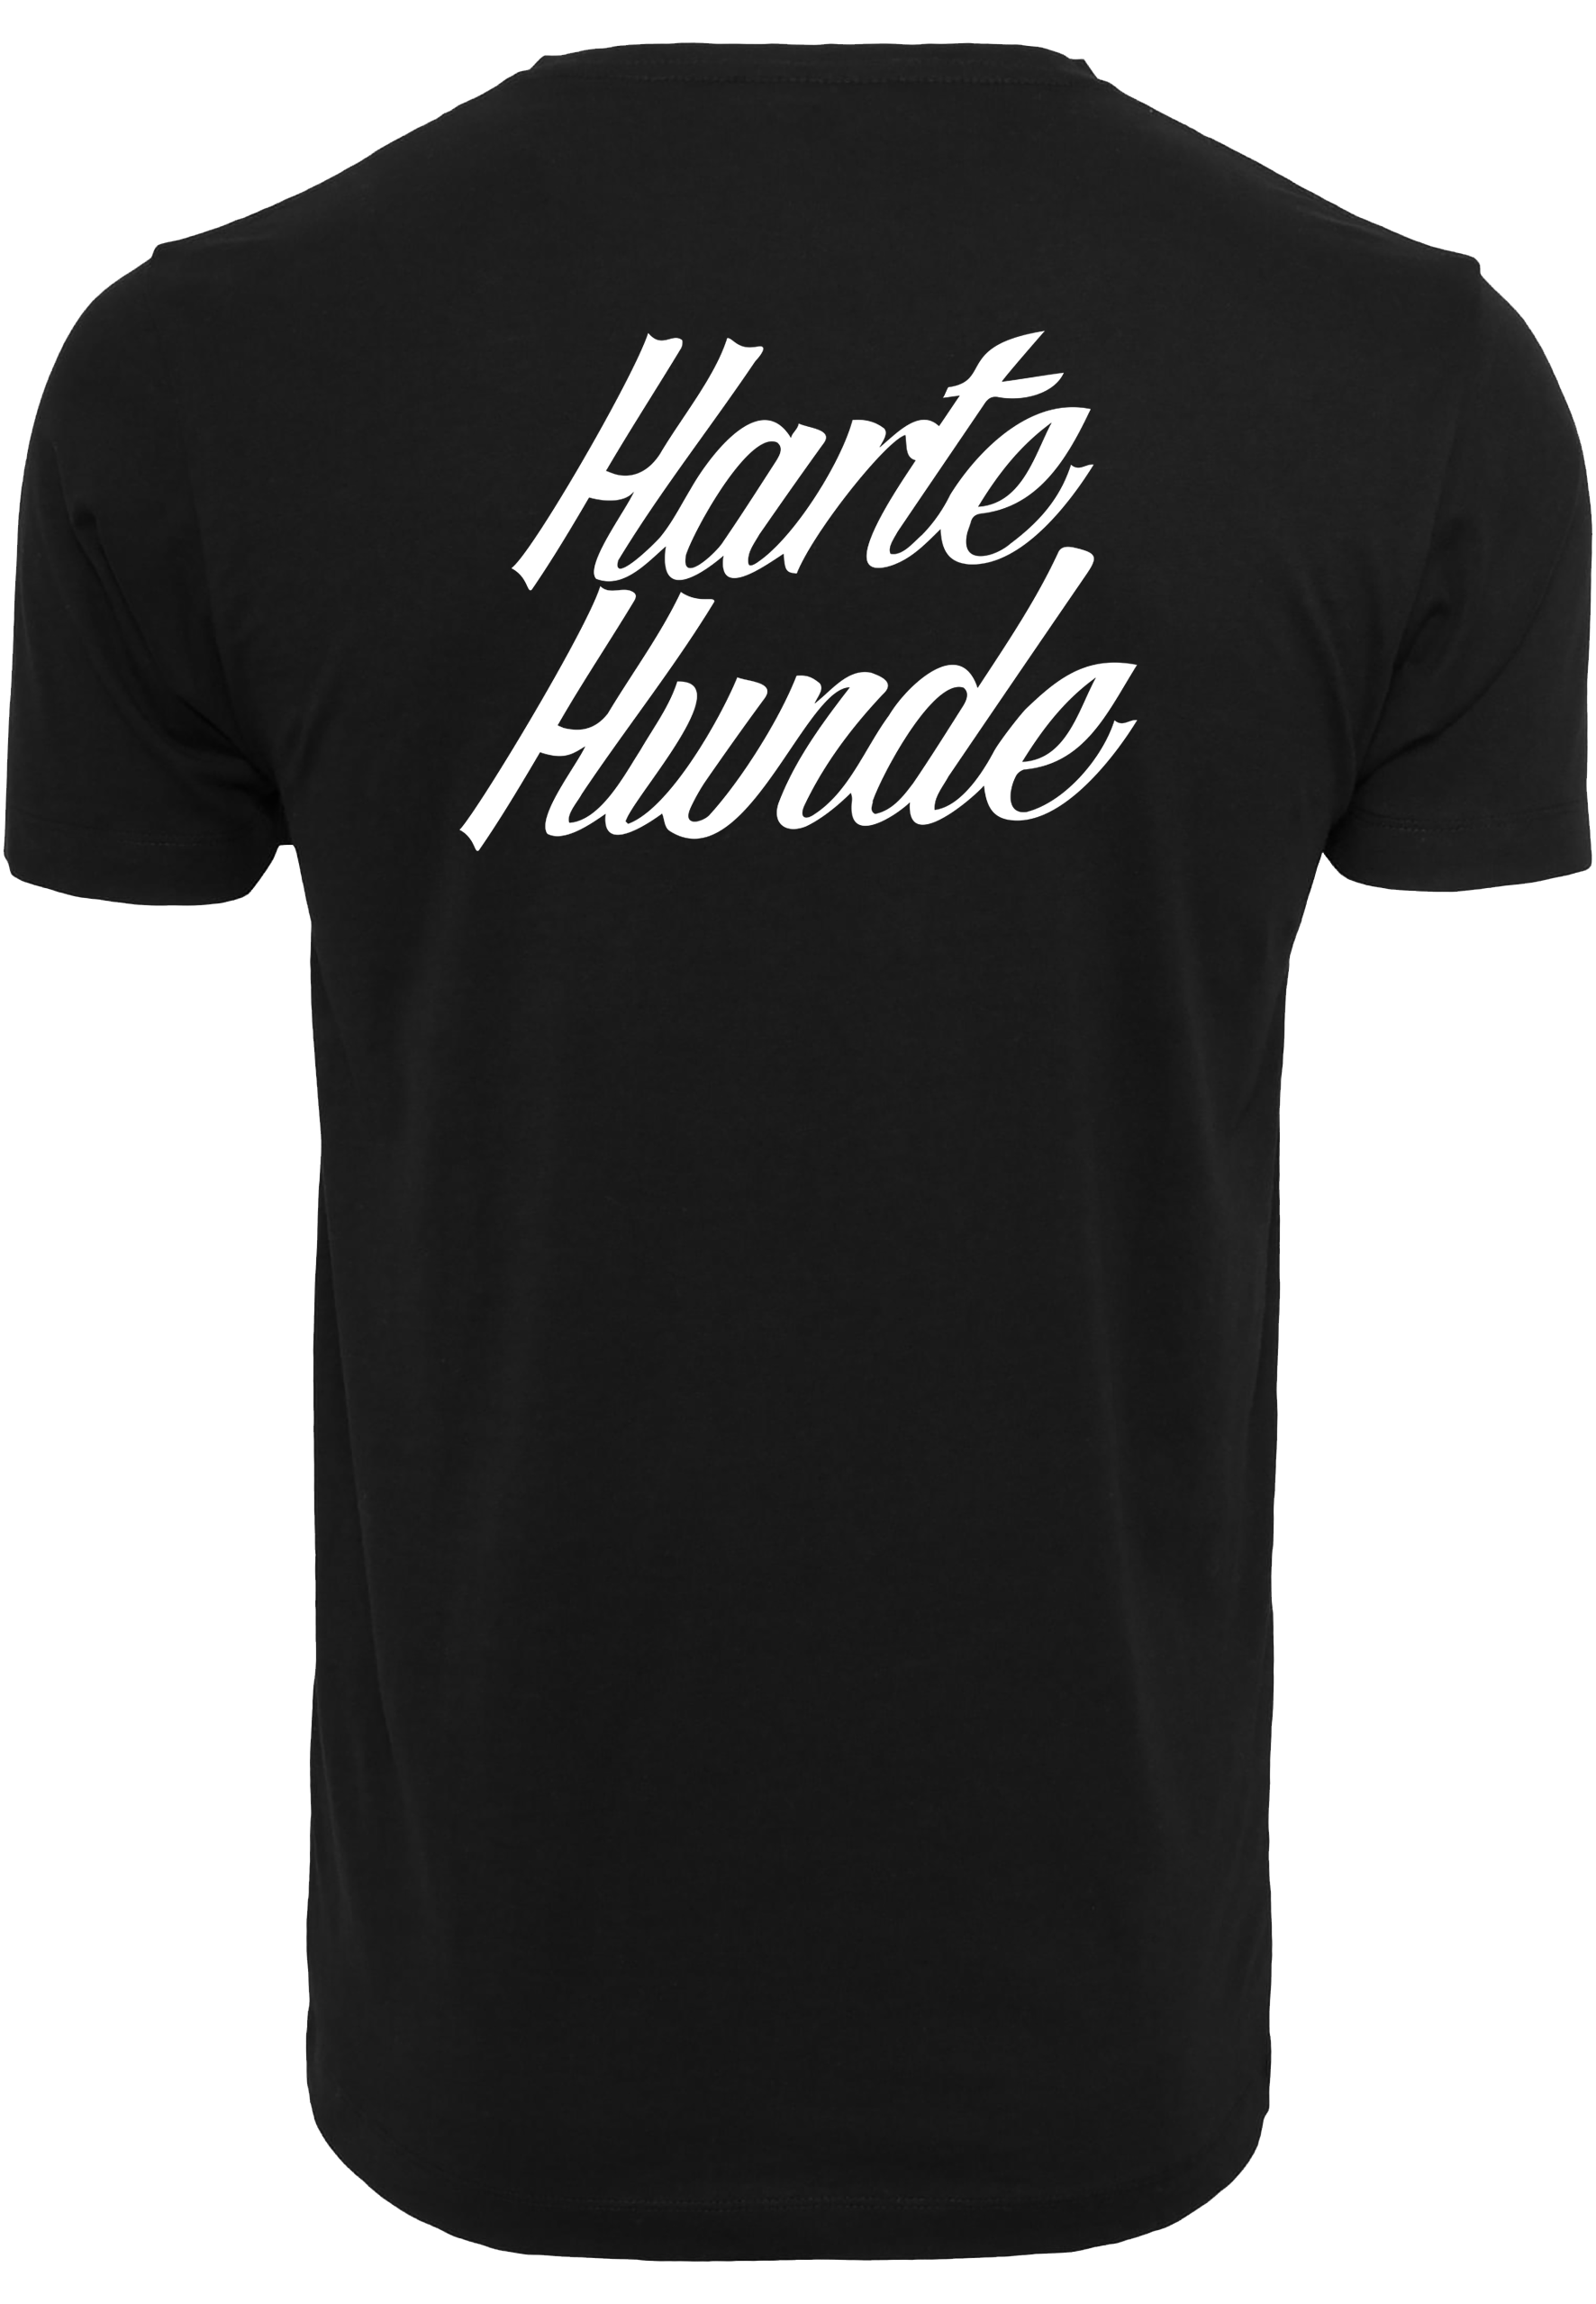 HFT - Harte Hunde Shirt (Black)